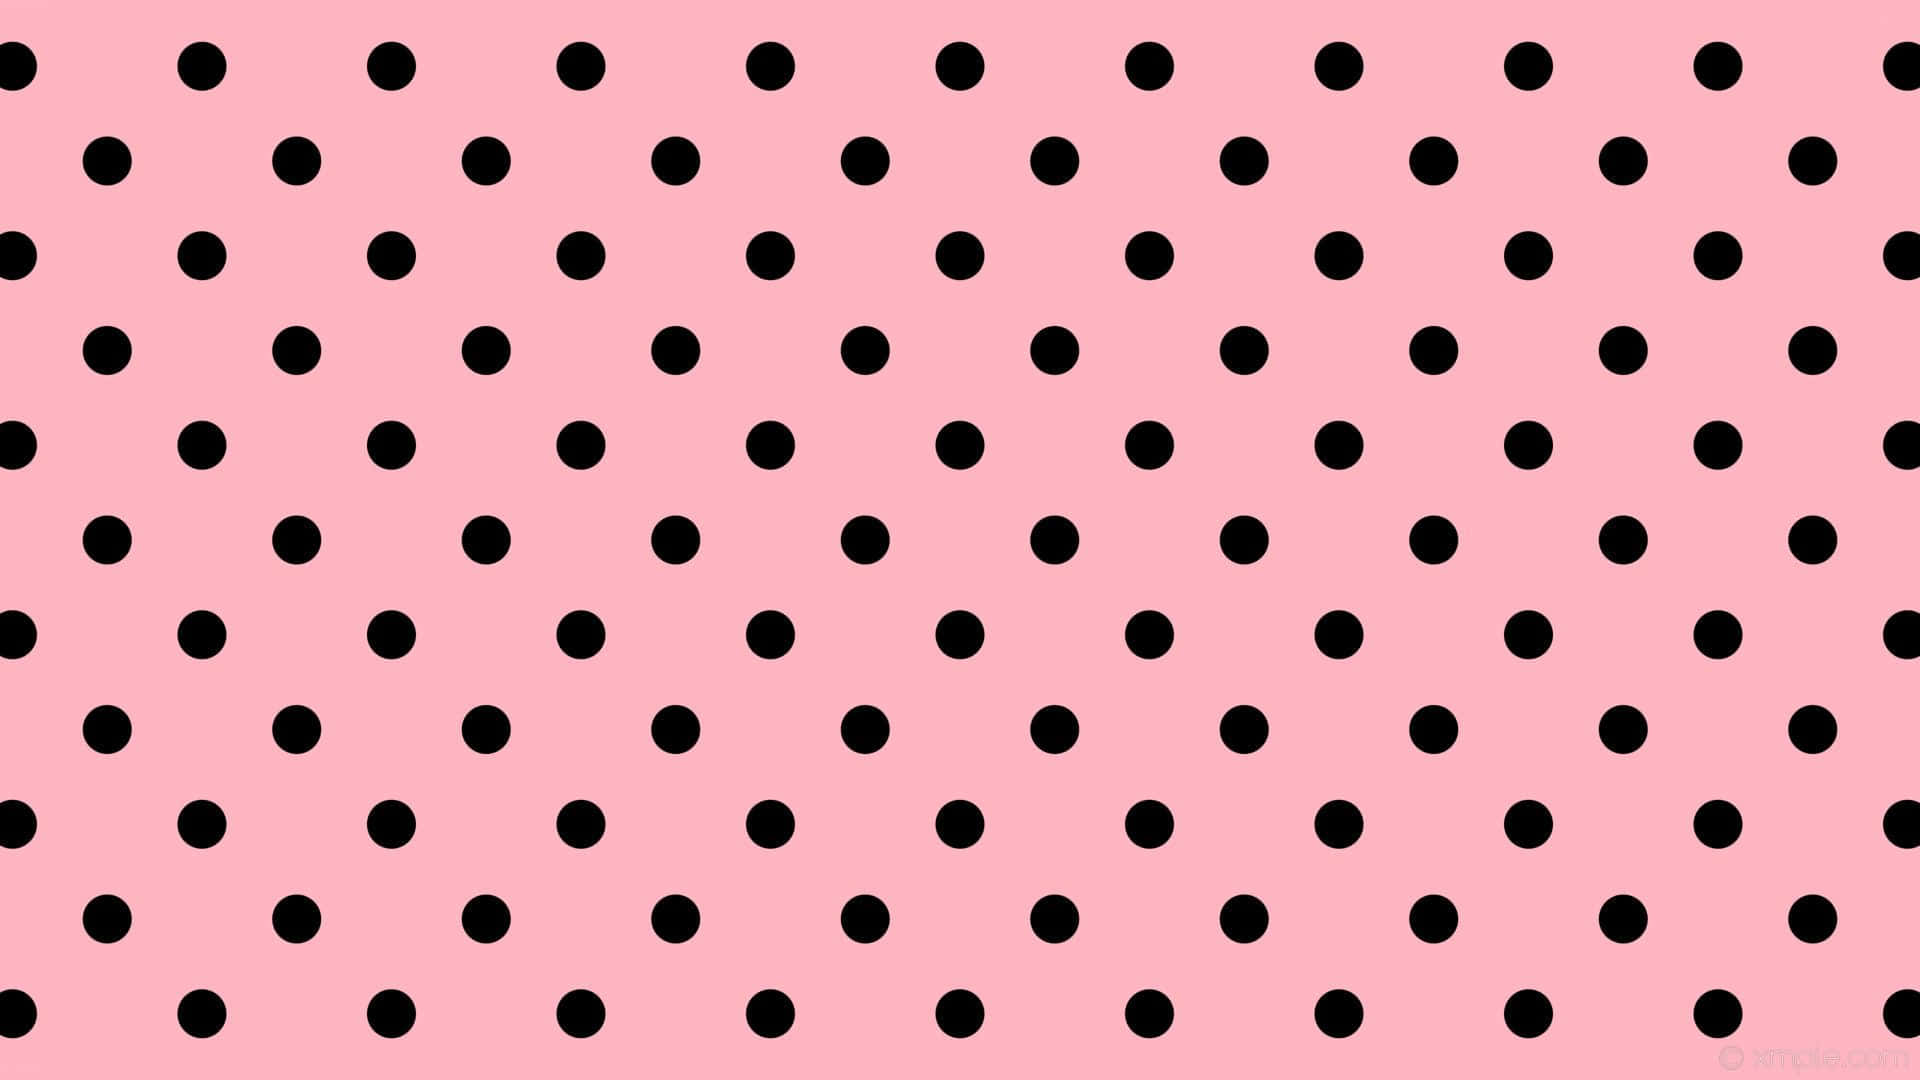 A fun and whimsical pink polka dot pattern.